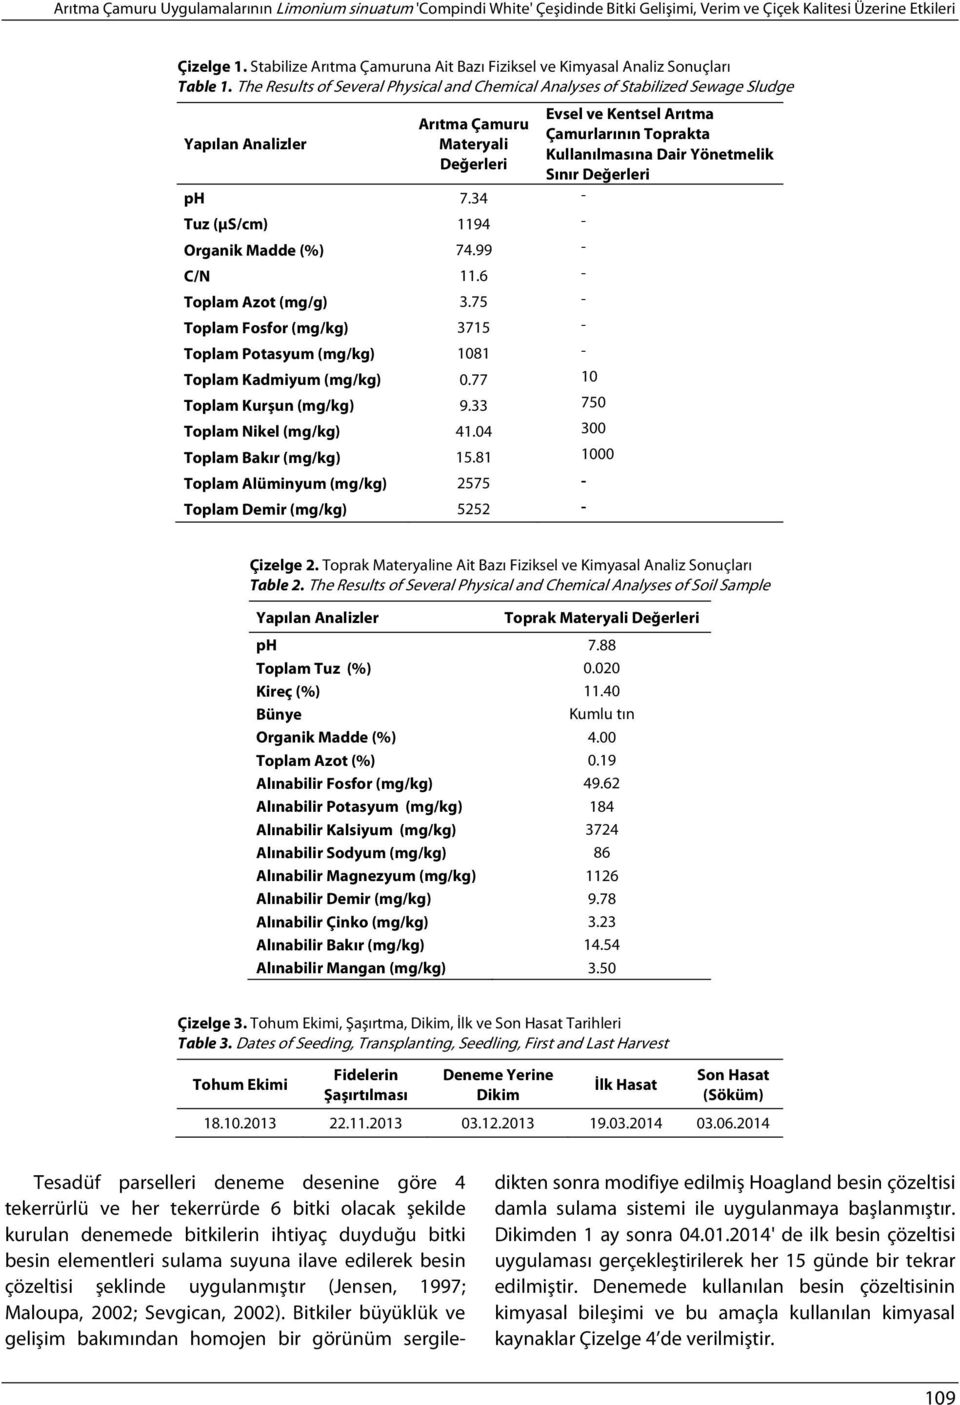 The Results of Several Physical and Chemical Analyses of Stabilized Sewage Sludge Yapılan Analizler Arıtma Çamuru Materyali Değerleri ph 7.34 - Tuz (μs/cm) 1194 - Organik Madde (%) 74.99 - C/N 11.